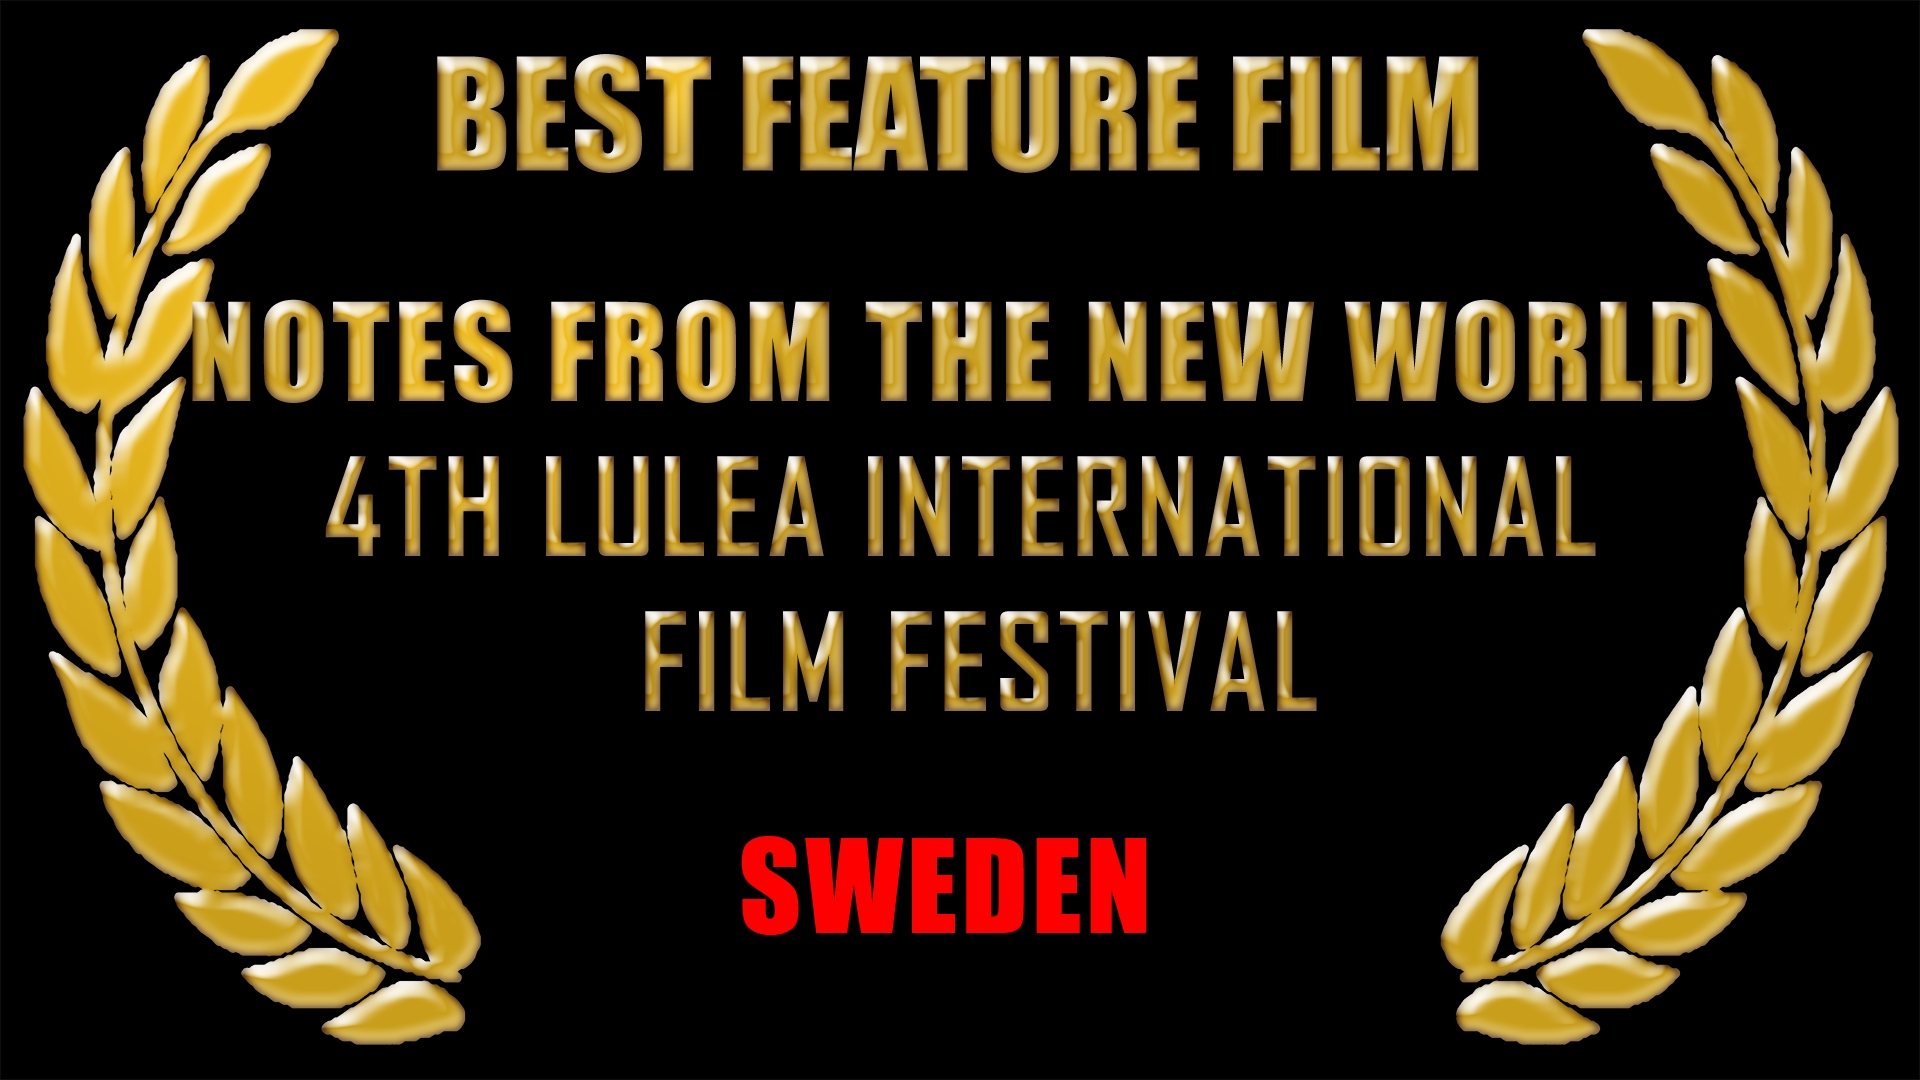 Best Feature Film, Sweden